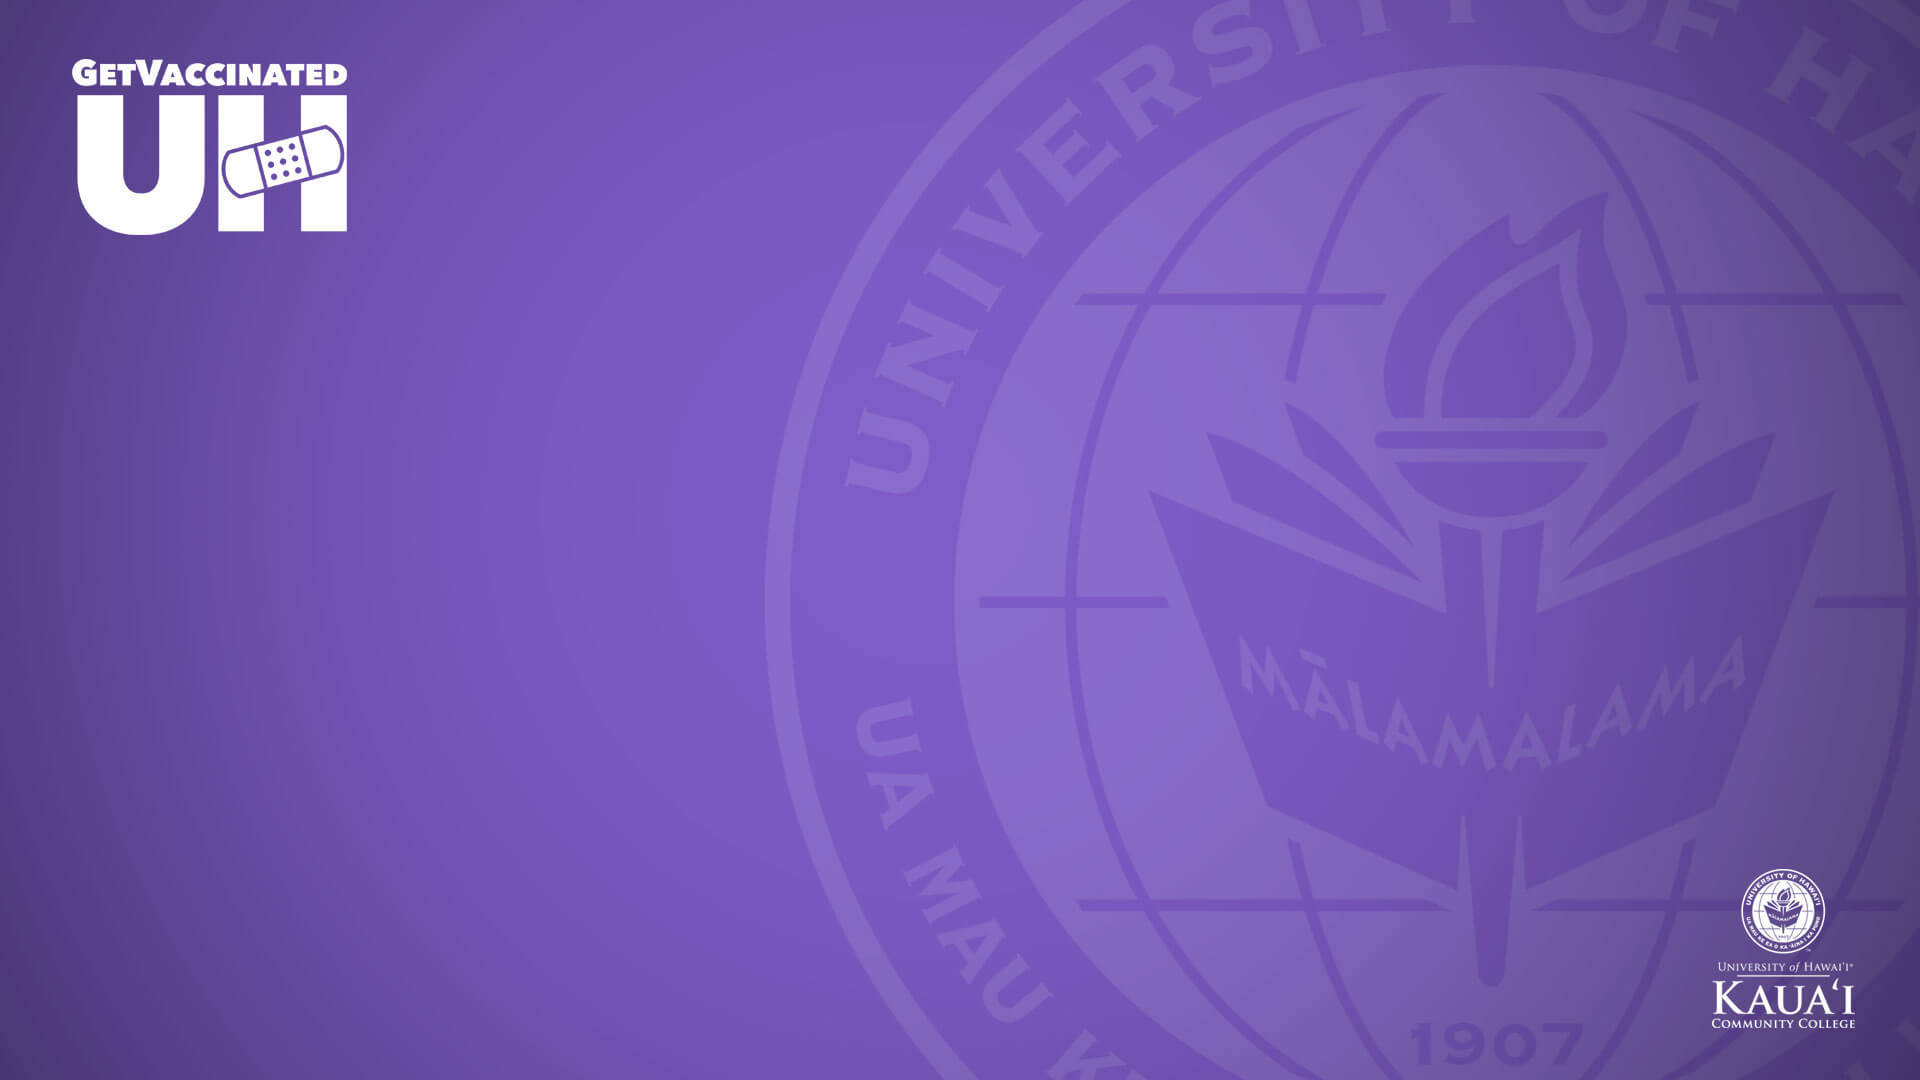 Fåvaccinated University Of Hawaii Kauai Violet Som Dator- Eller Mobilbakgrundsbild. Wallpaper